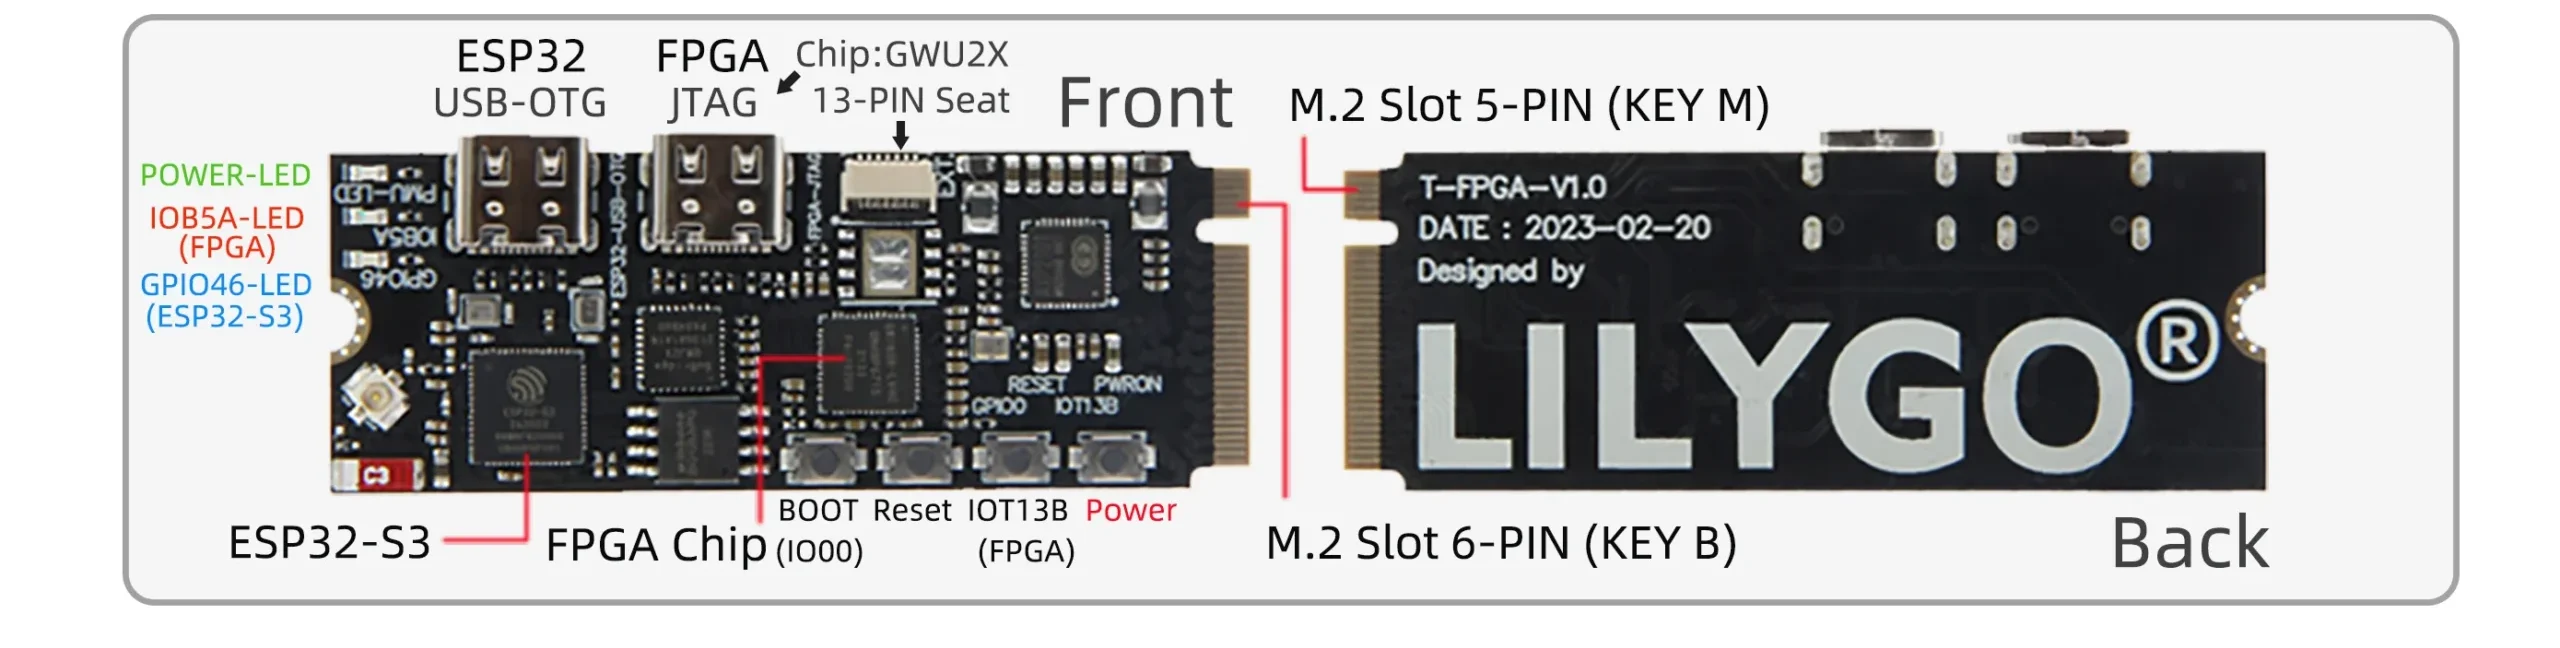 LILYGO's T-FPGA kit Specifications